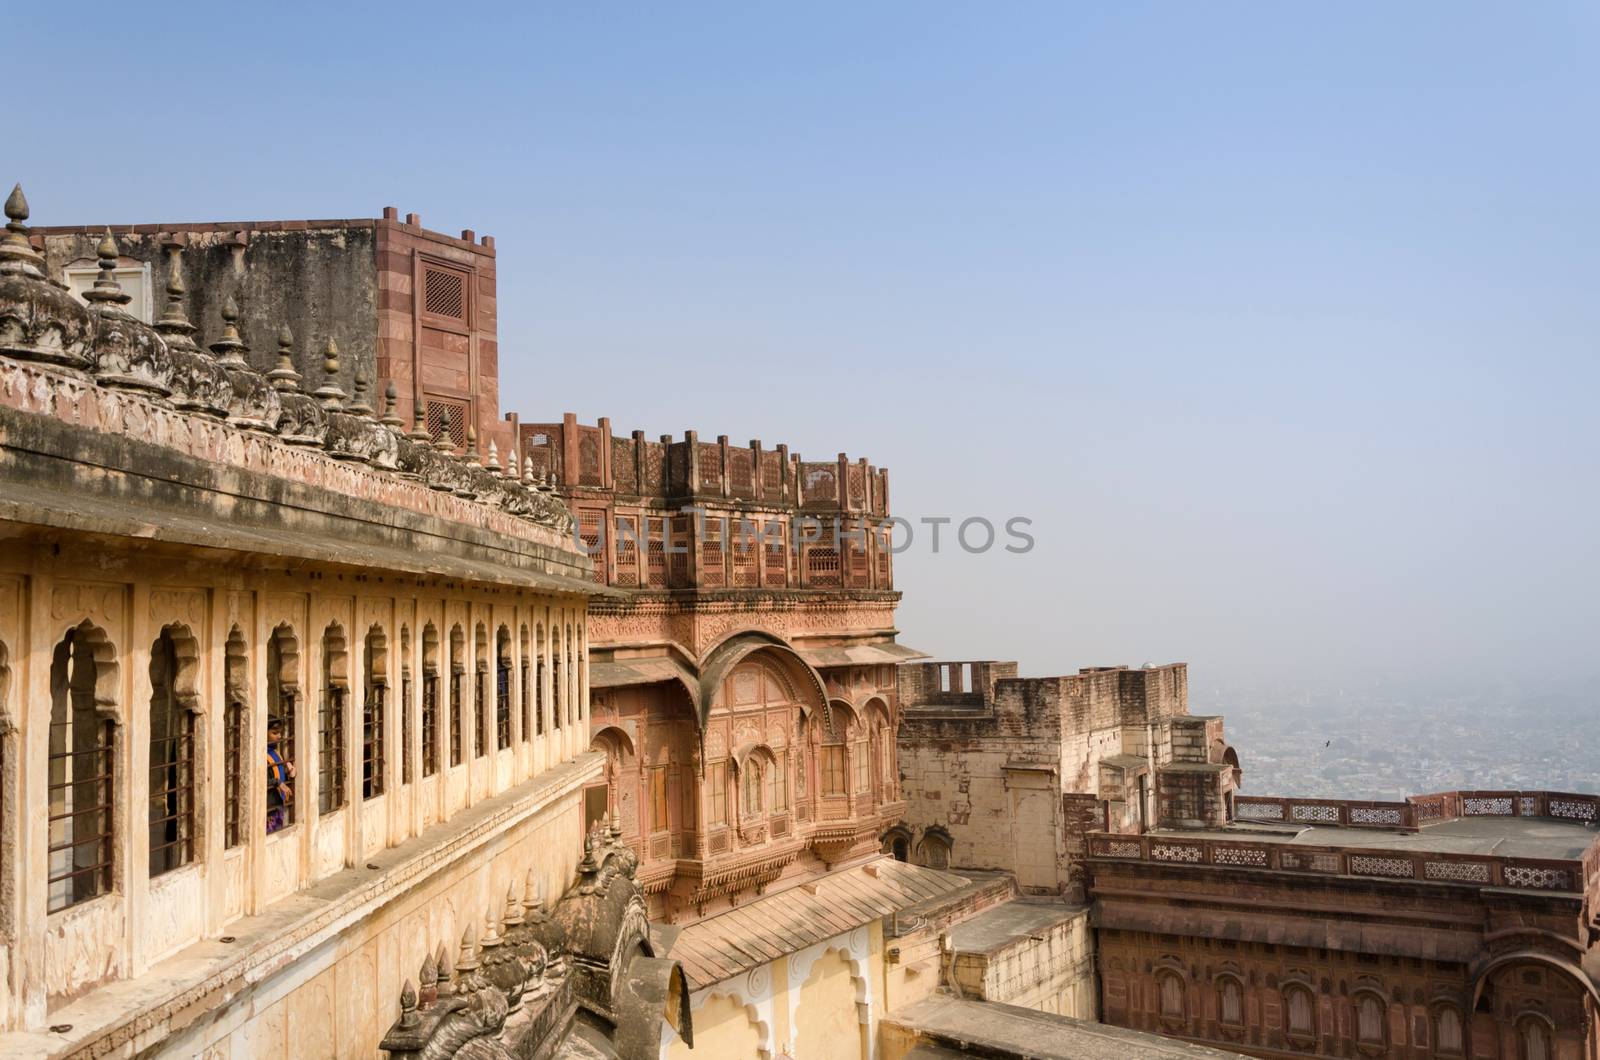 Meherangarh fort in jodhpur, rajasthan, india 